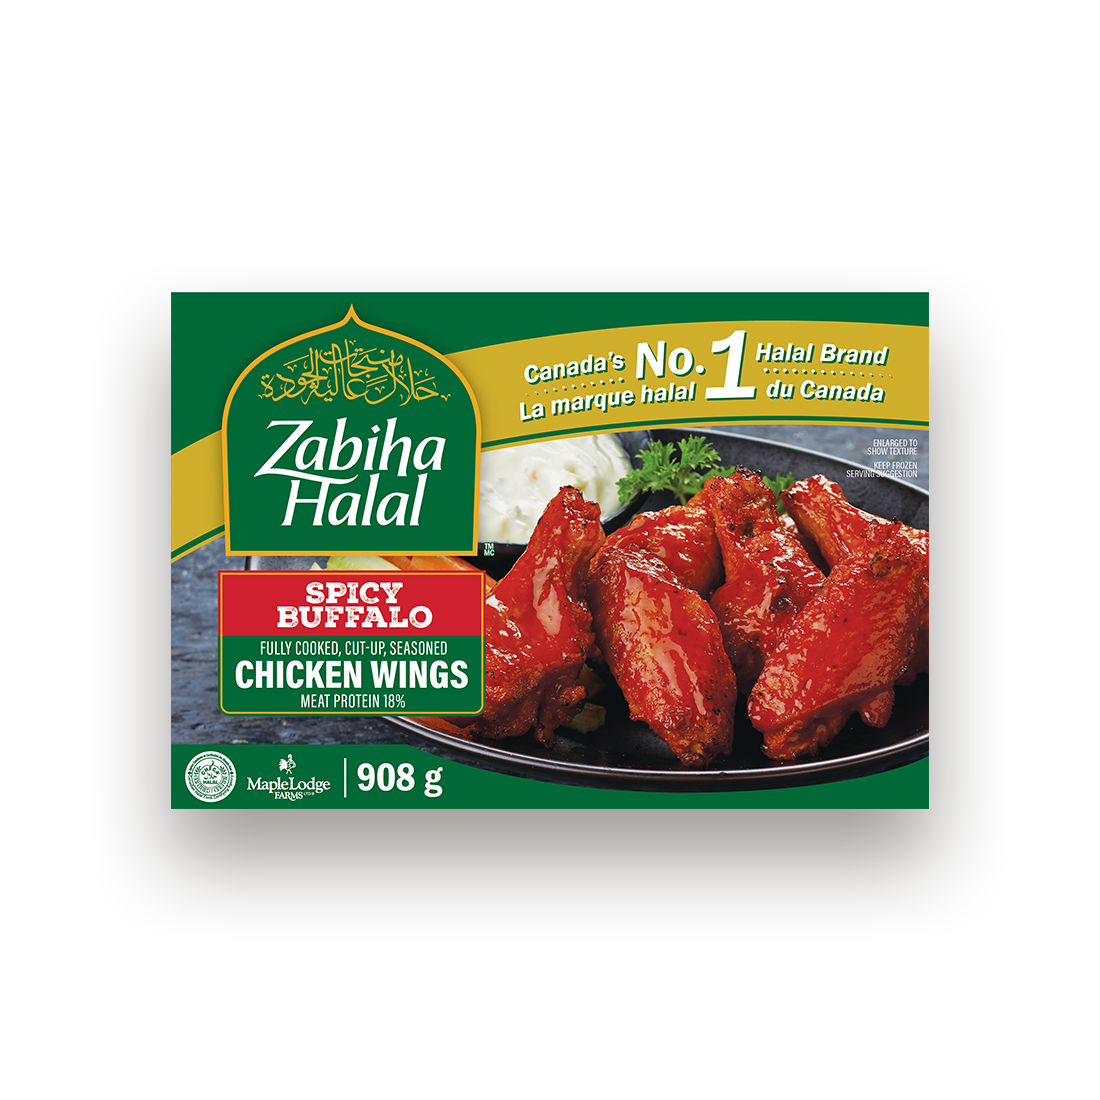 A package of frozen Spicy Buffalo Style Chicken Wings